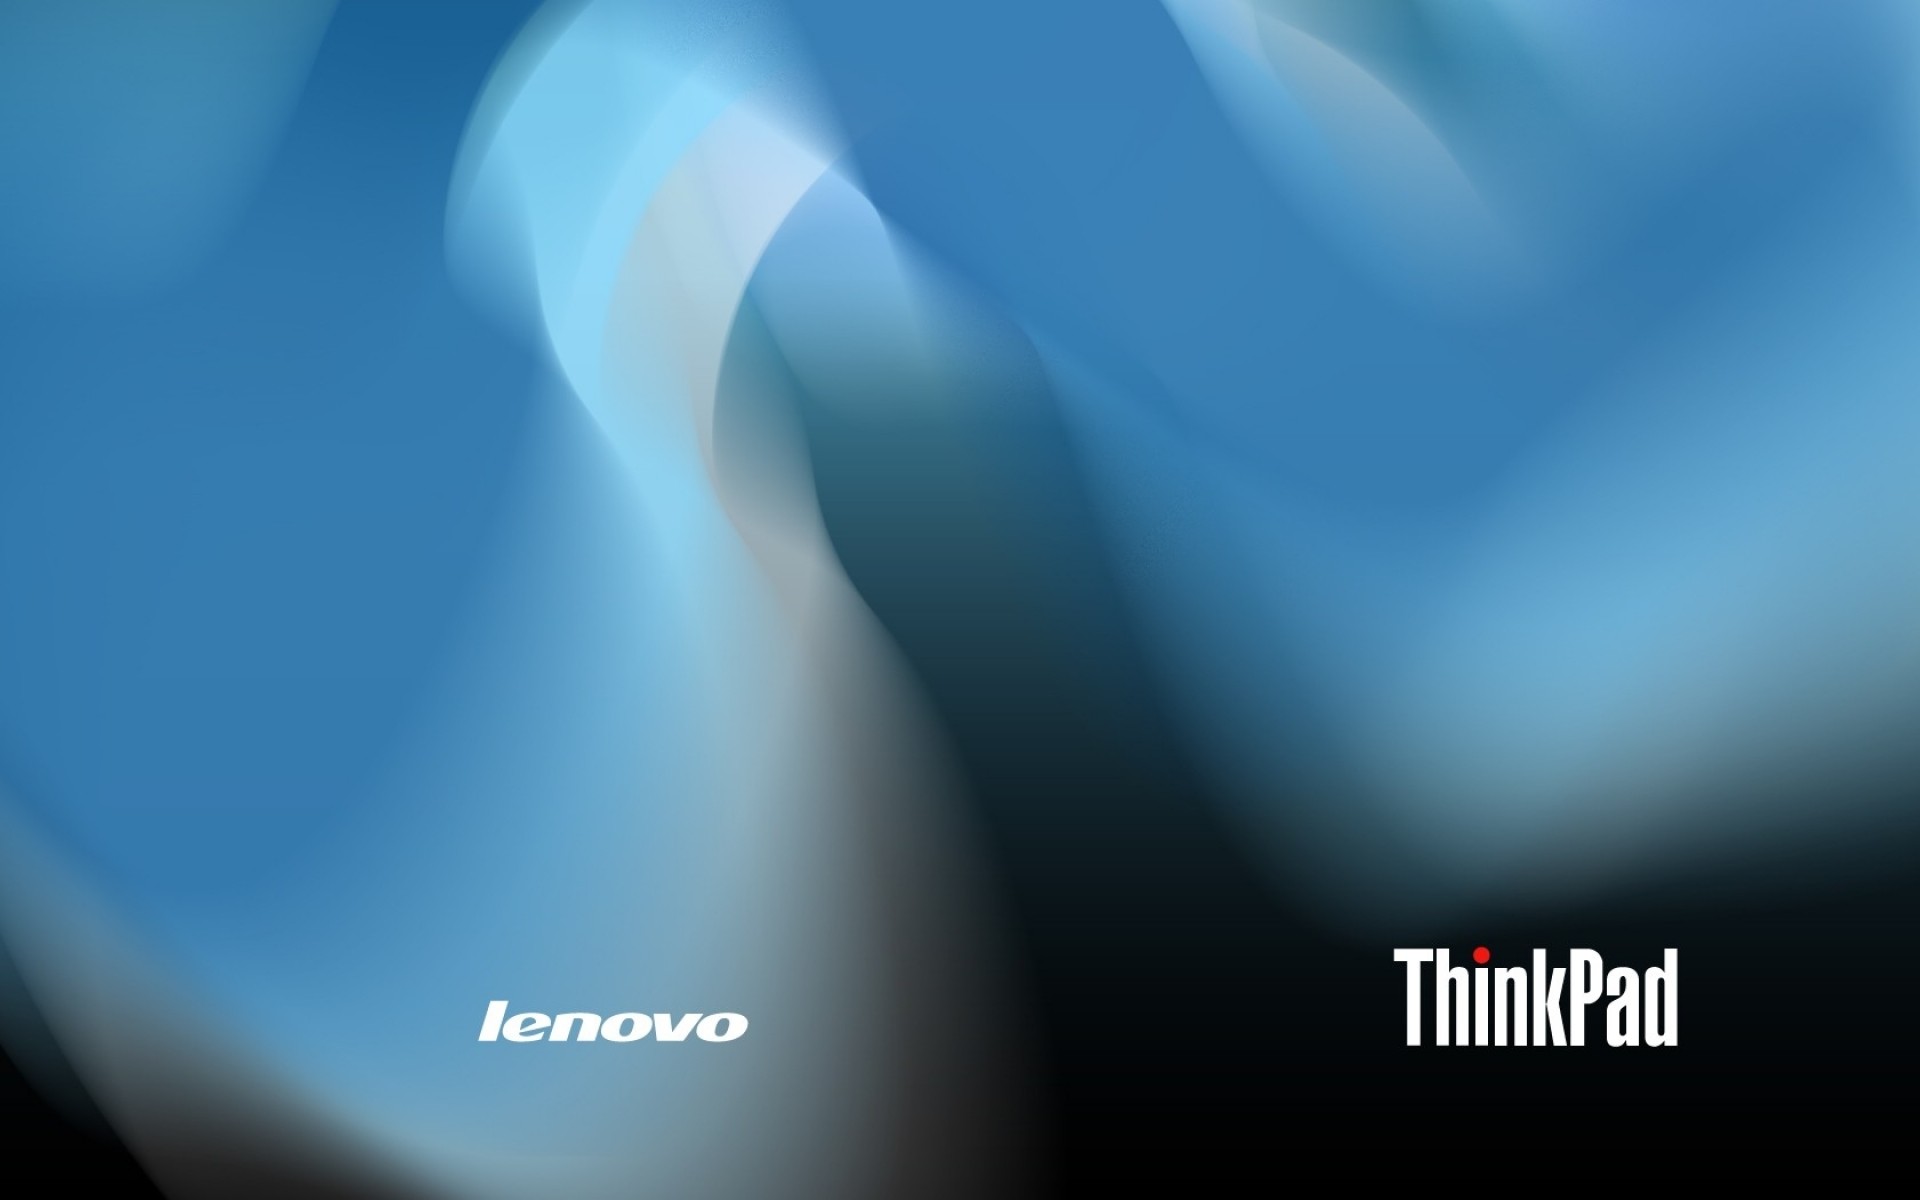 lenovo k3 note fond d'écran,bleu,aqua,ciel,atmosphère,police de caractère